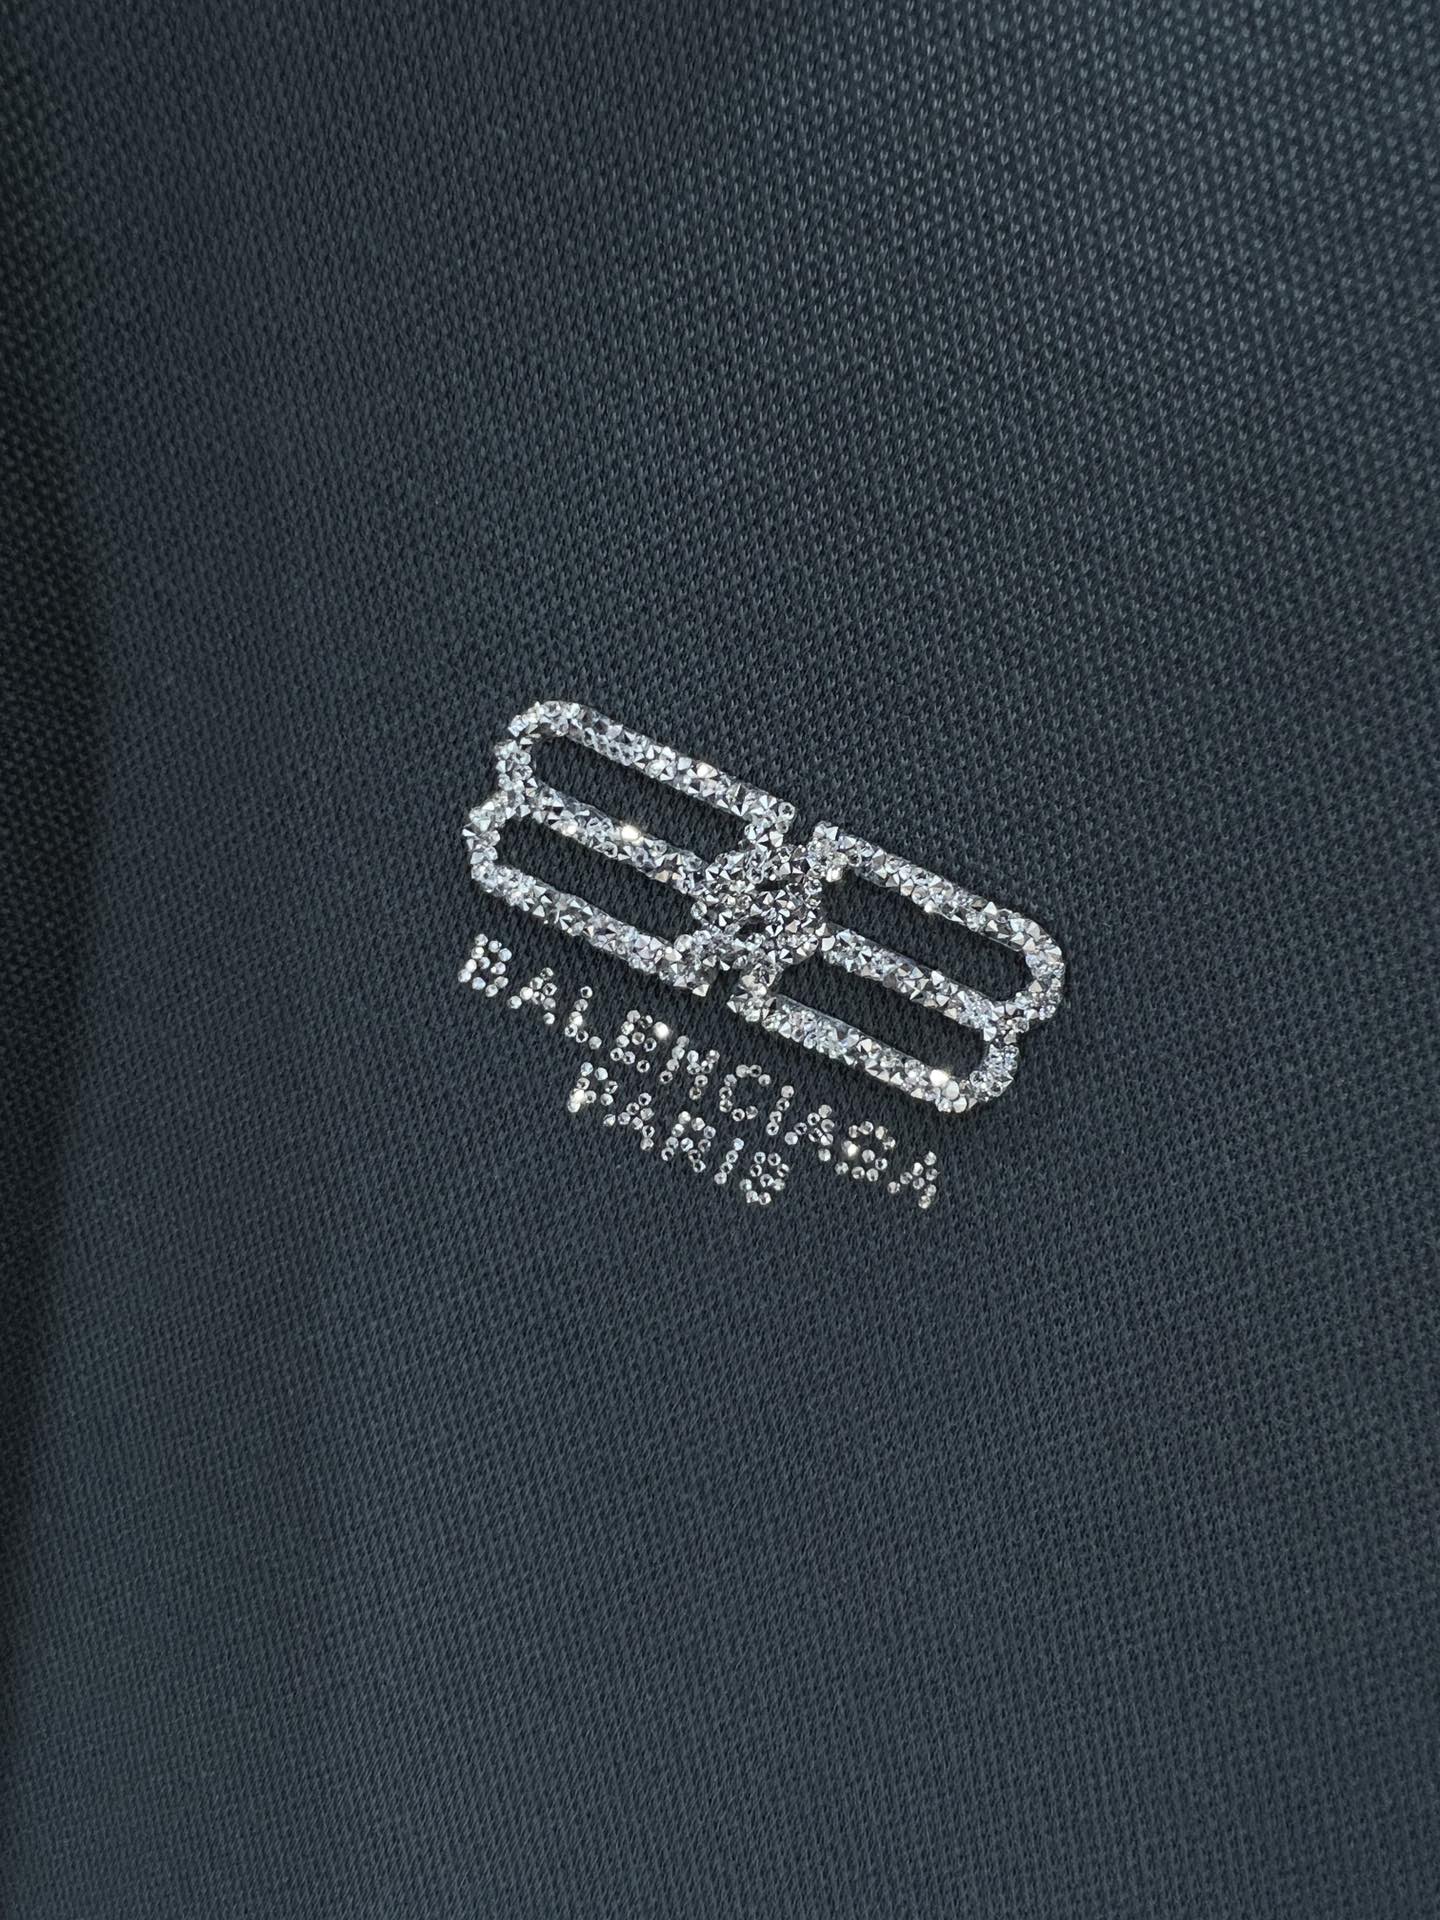 Balenciaga巴黎世家官网同步爆款翻领长袖延续的款式继续火爆！总能把握良机尽展才华点缀精致图案风格